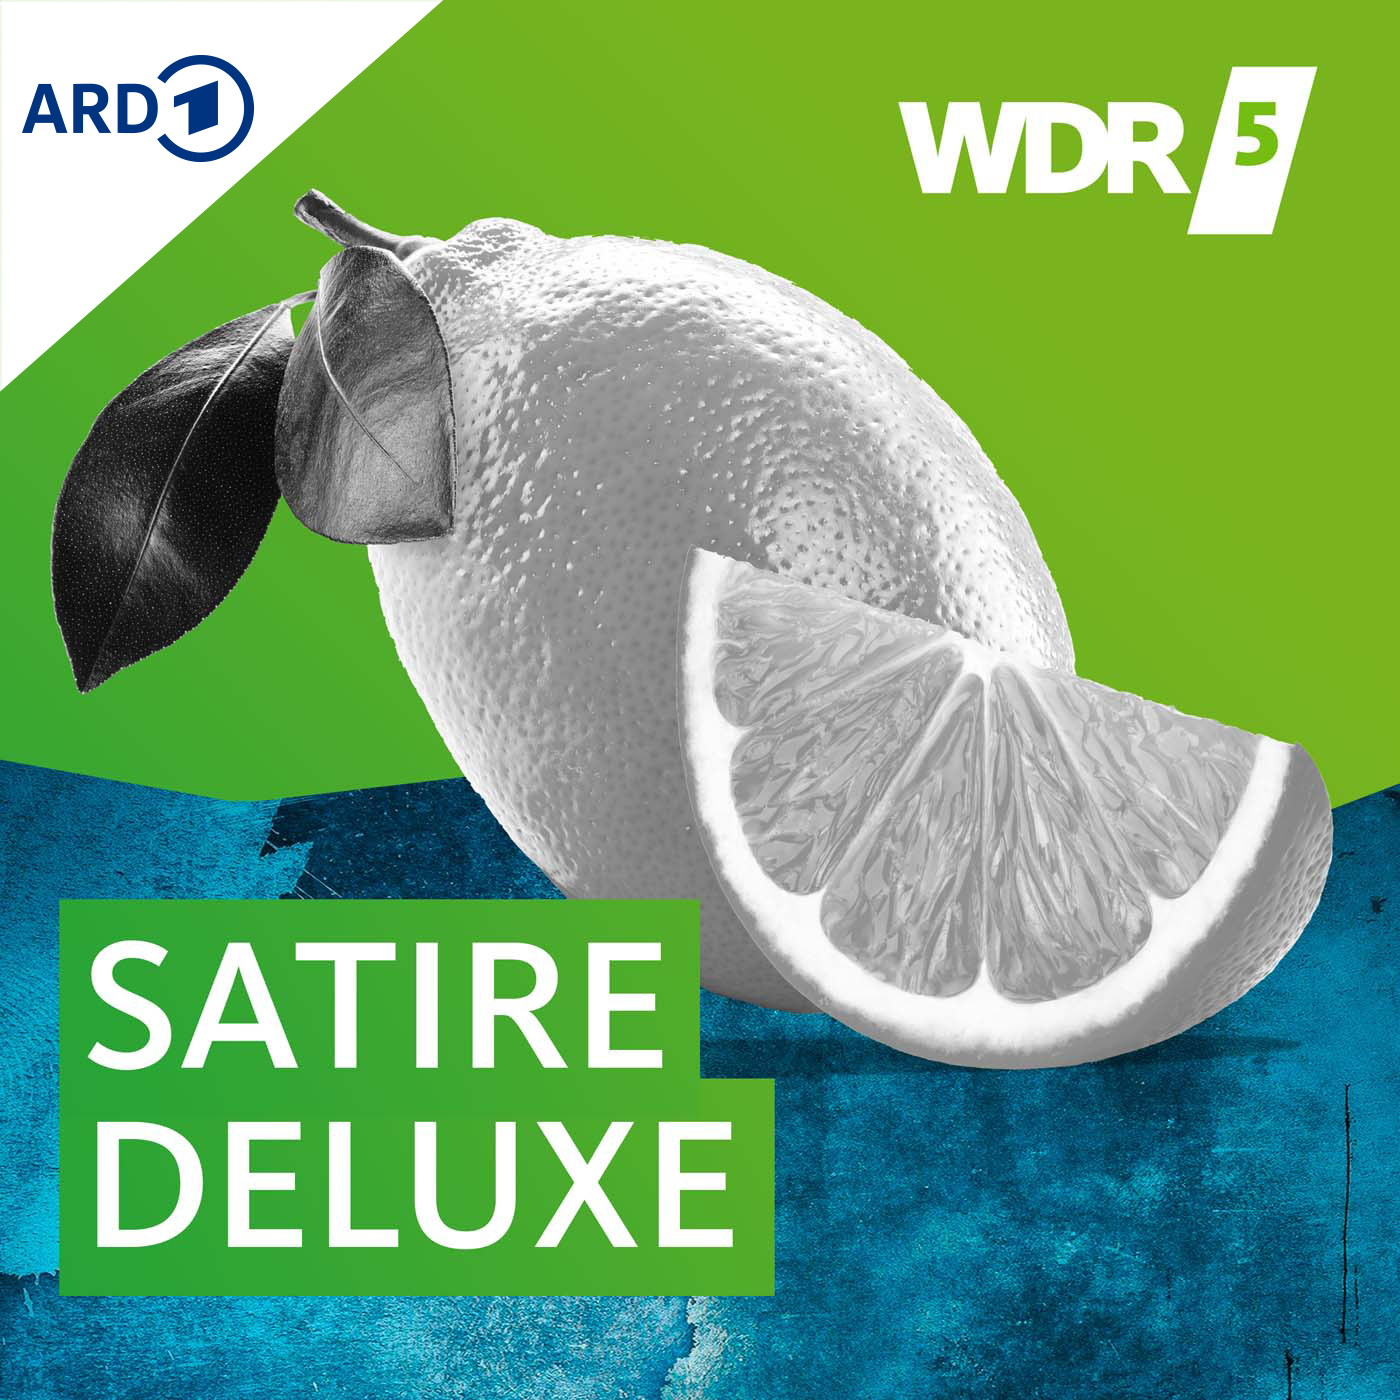 WDR 5 Satire Deluxe - Ganze Sendung podcast